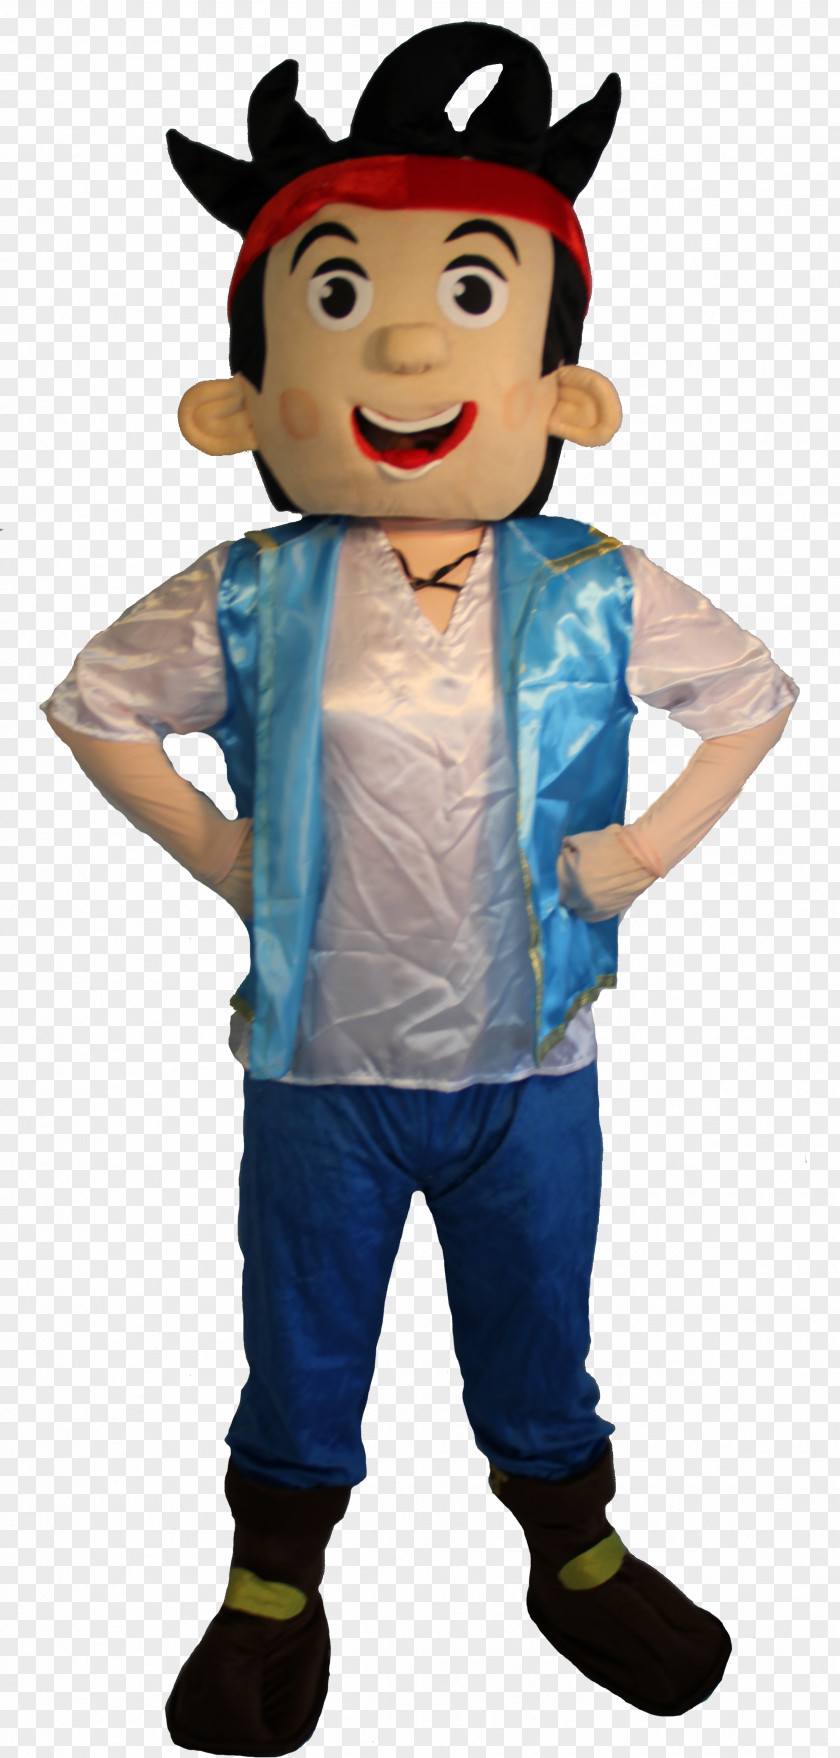 Jake Costumed Character Mascot Dora The Explorer PNG